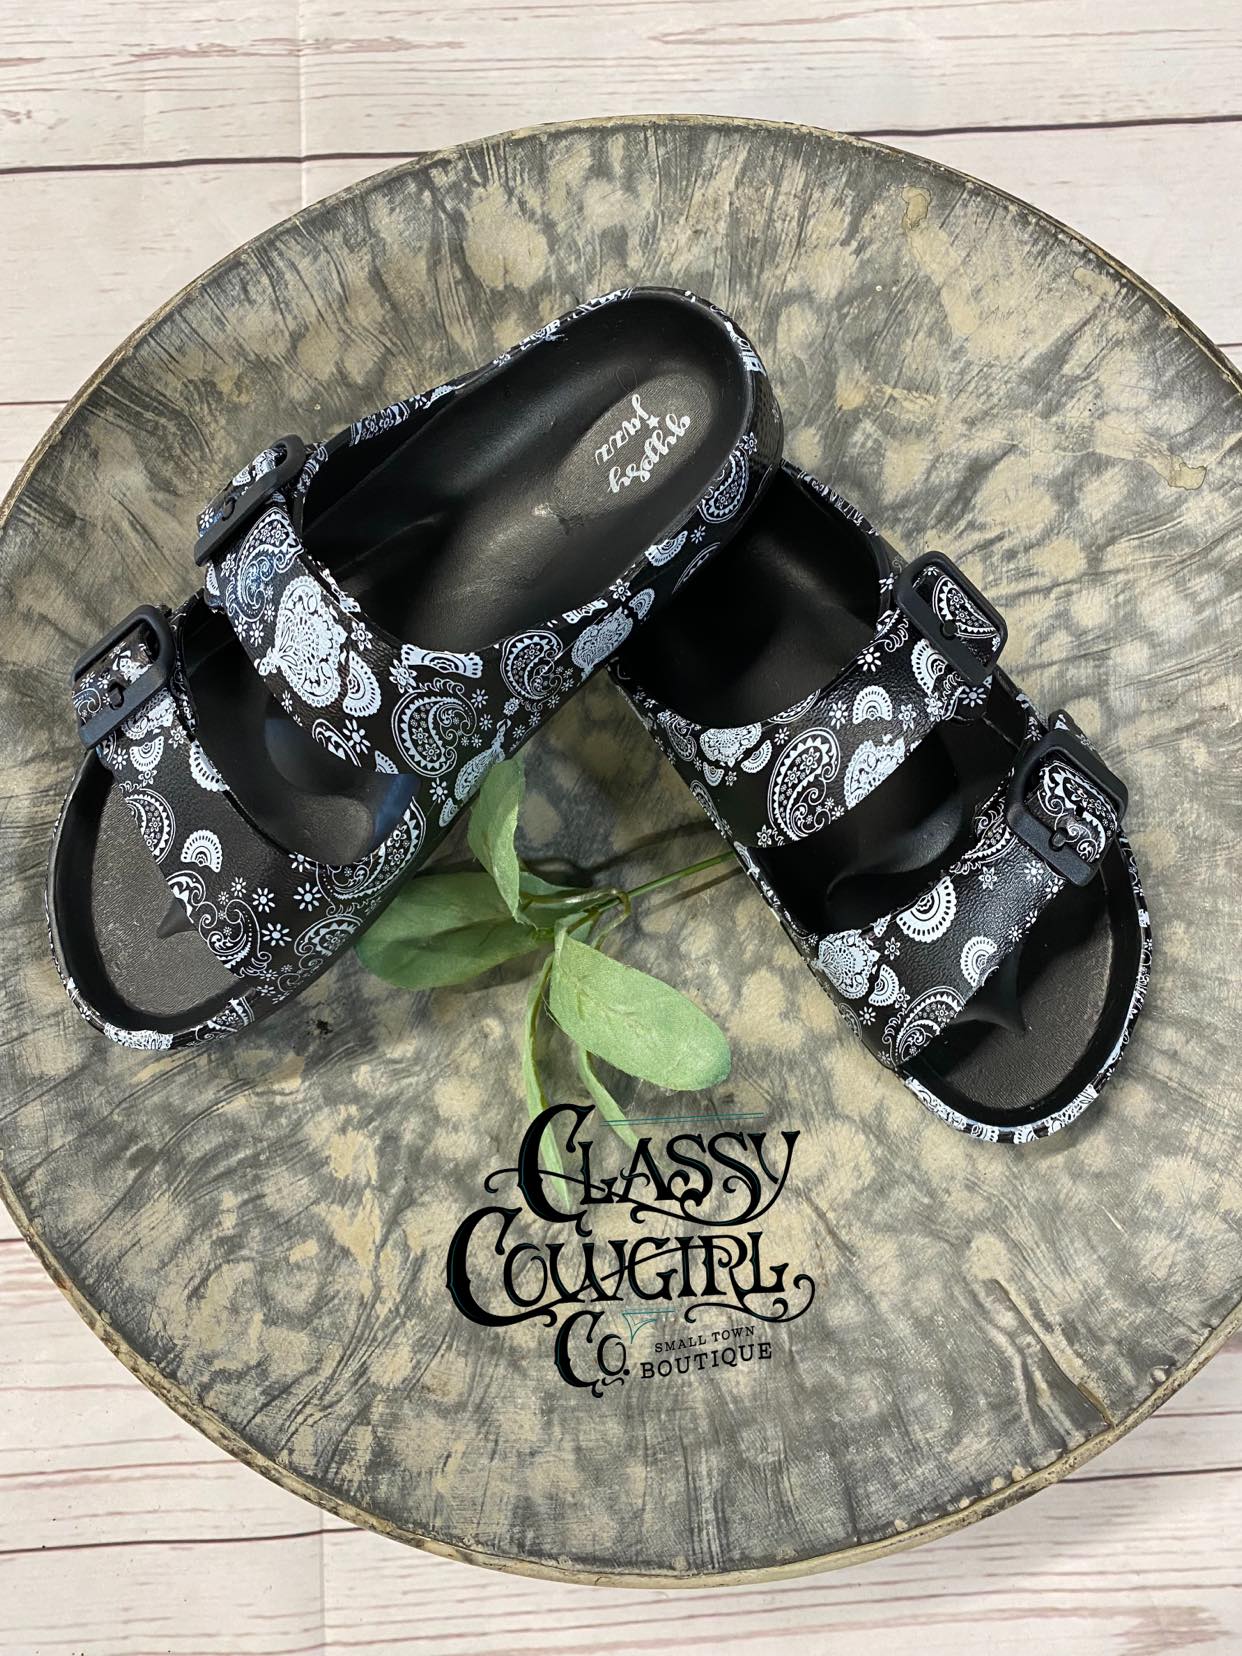 SALE- Mama Mia Black Paisley Sandals